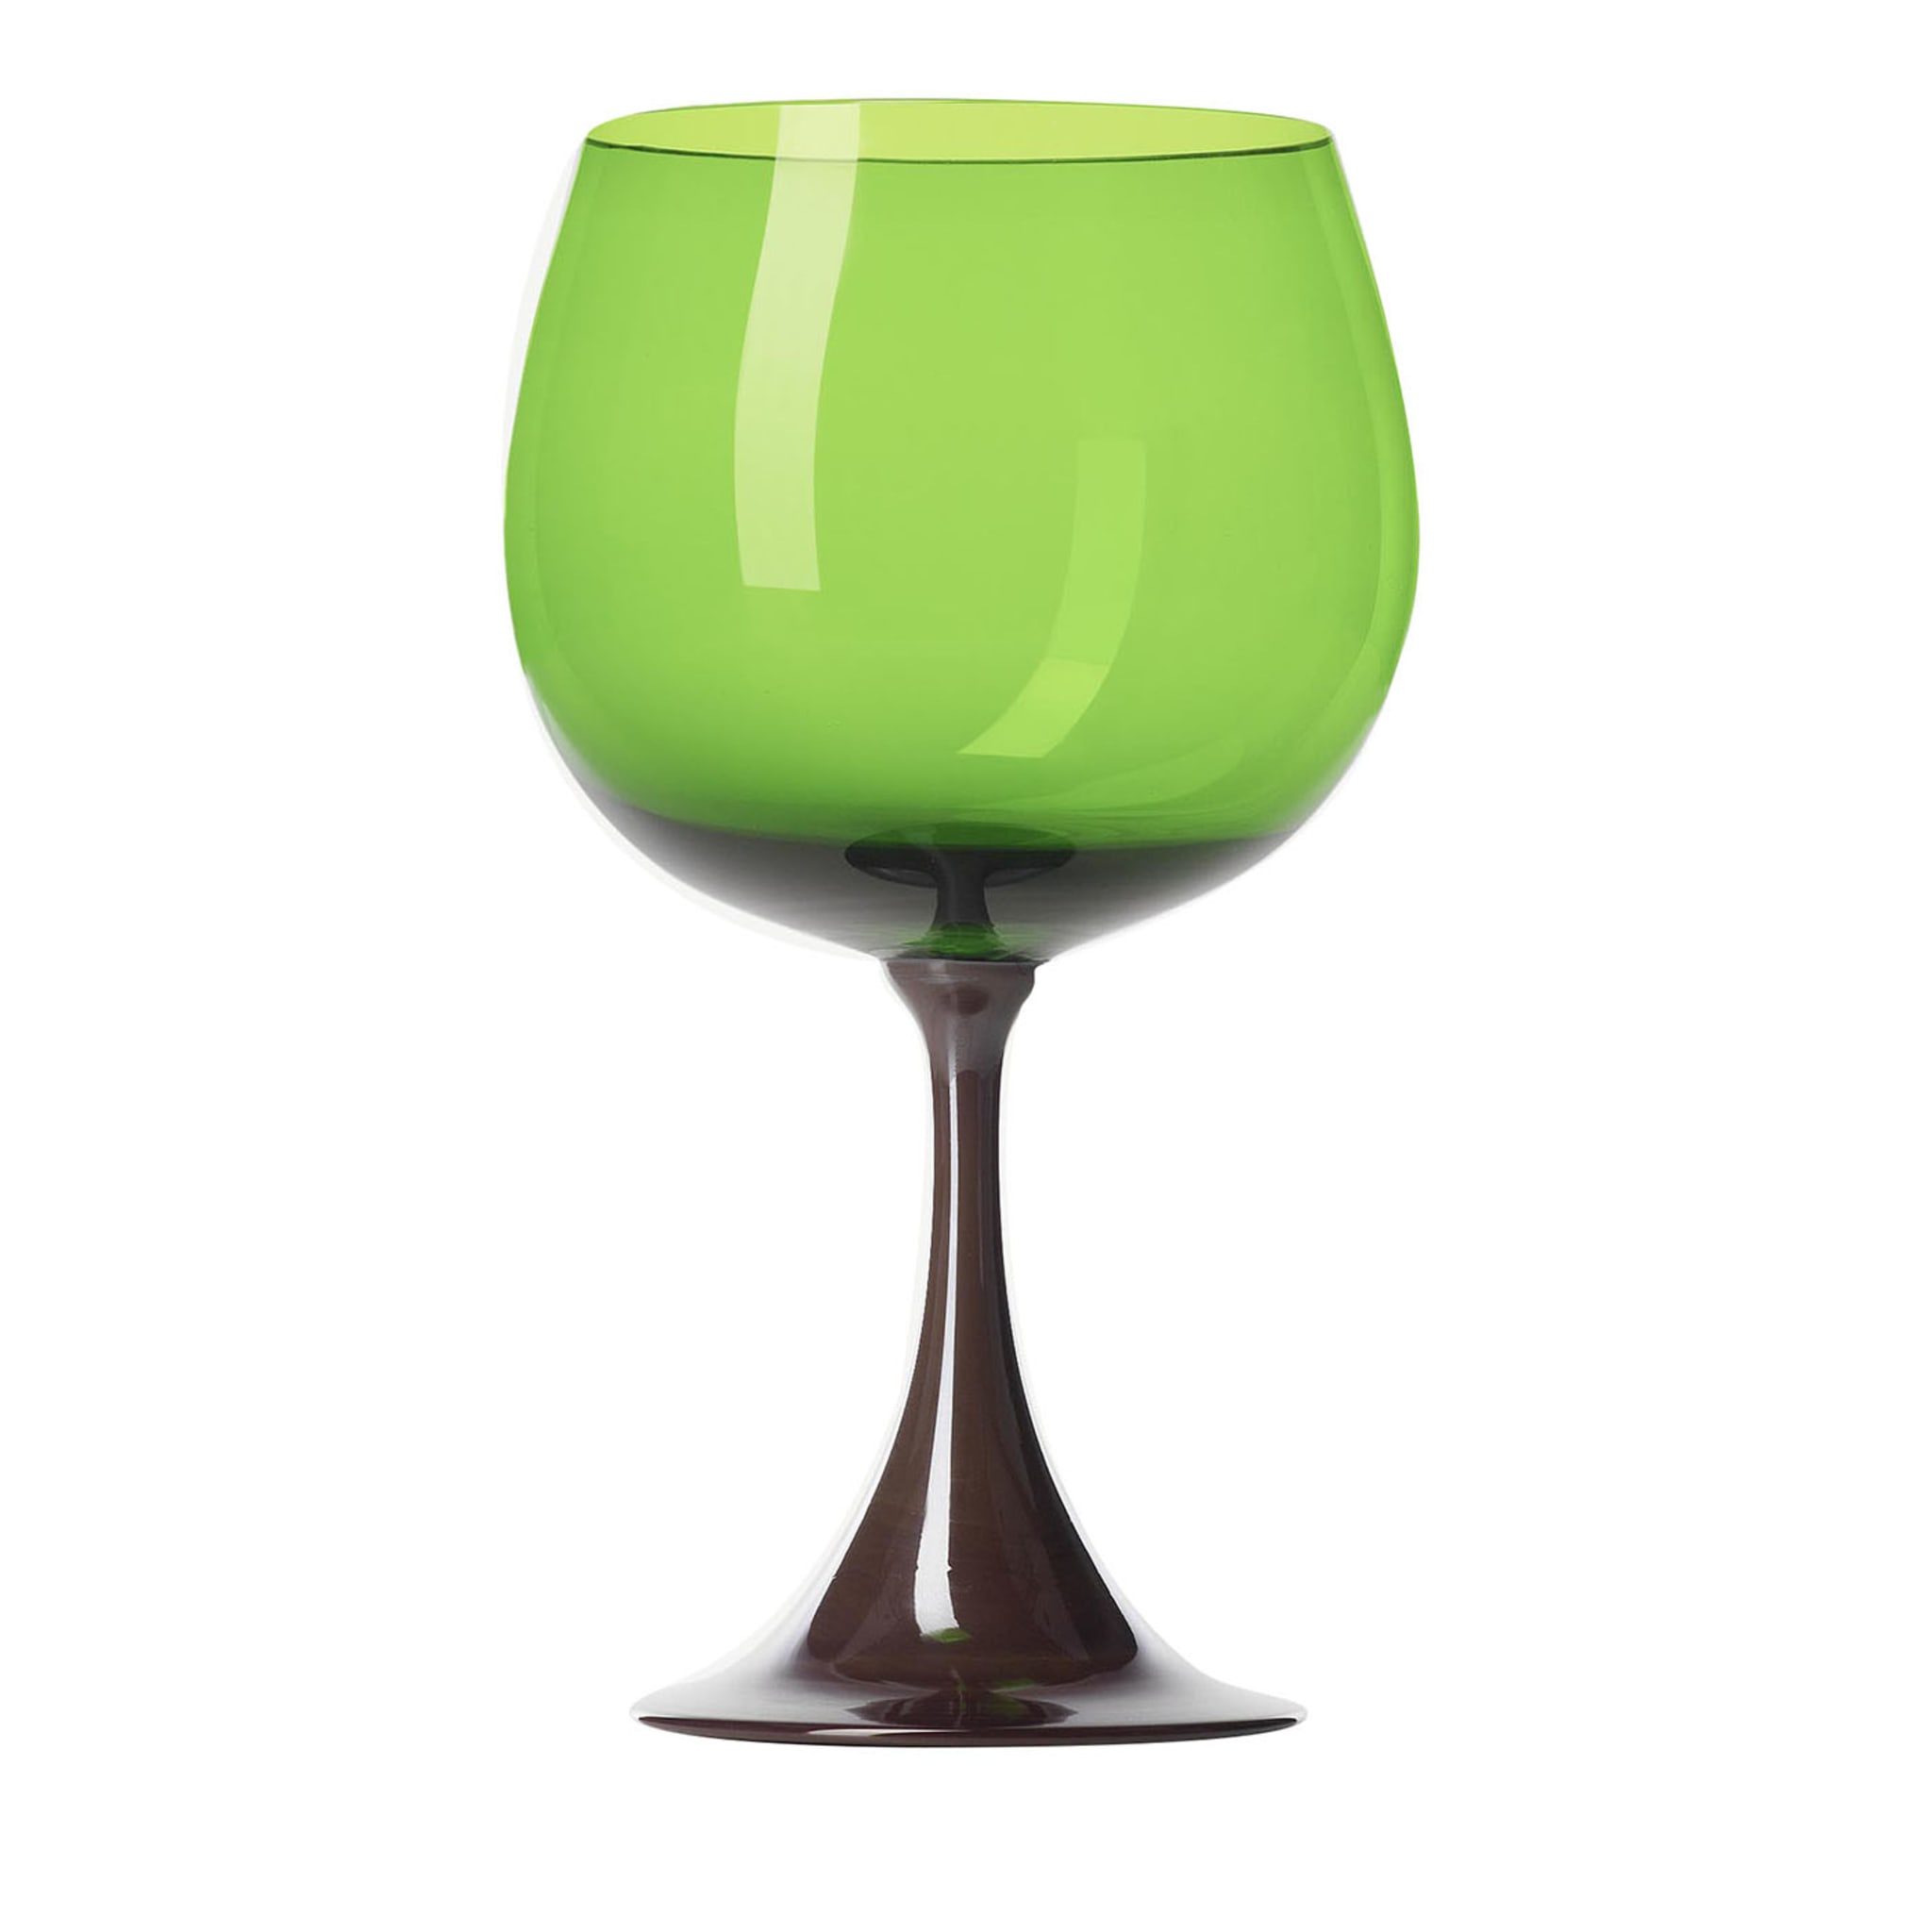 Bicchiere a stelo Burlesque verde e mirtillo di Stefano Marcato - Vista principale